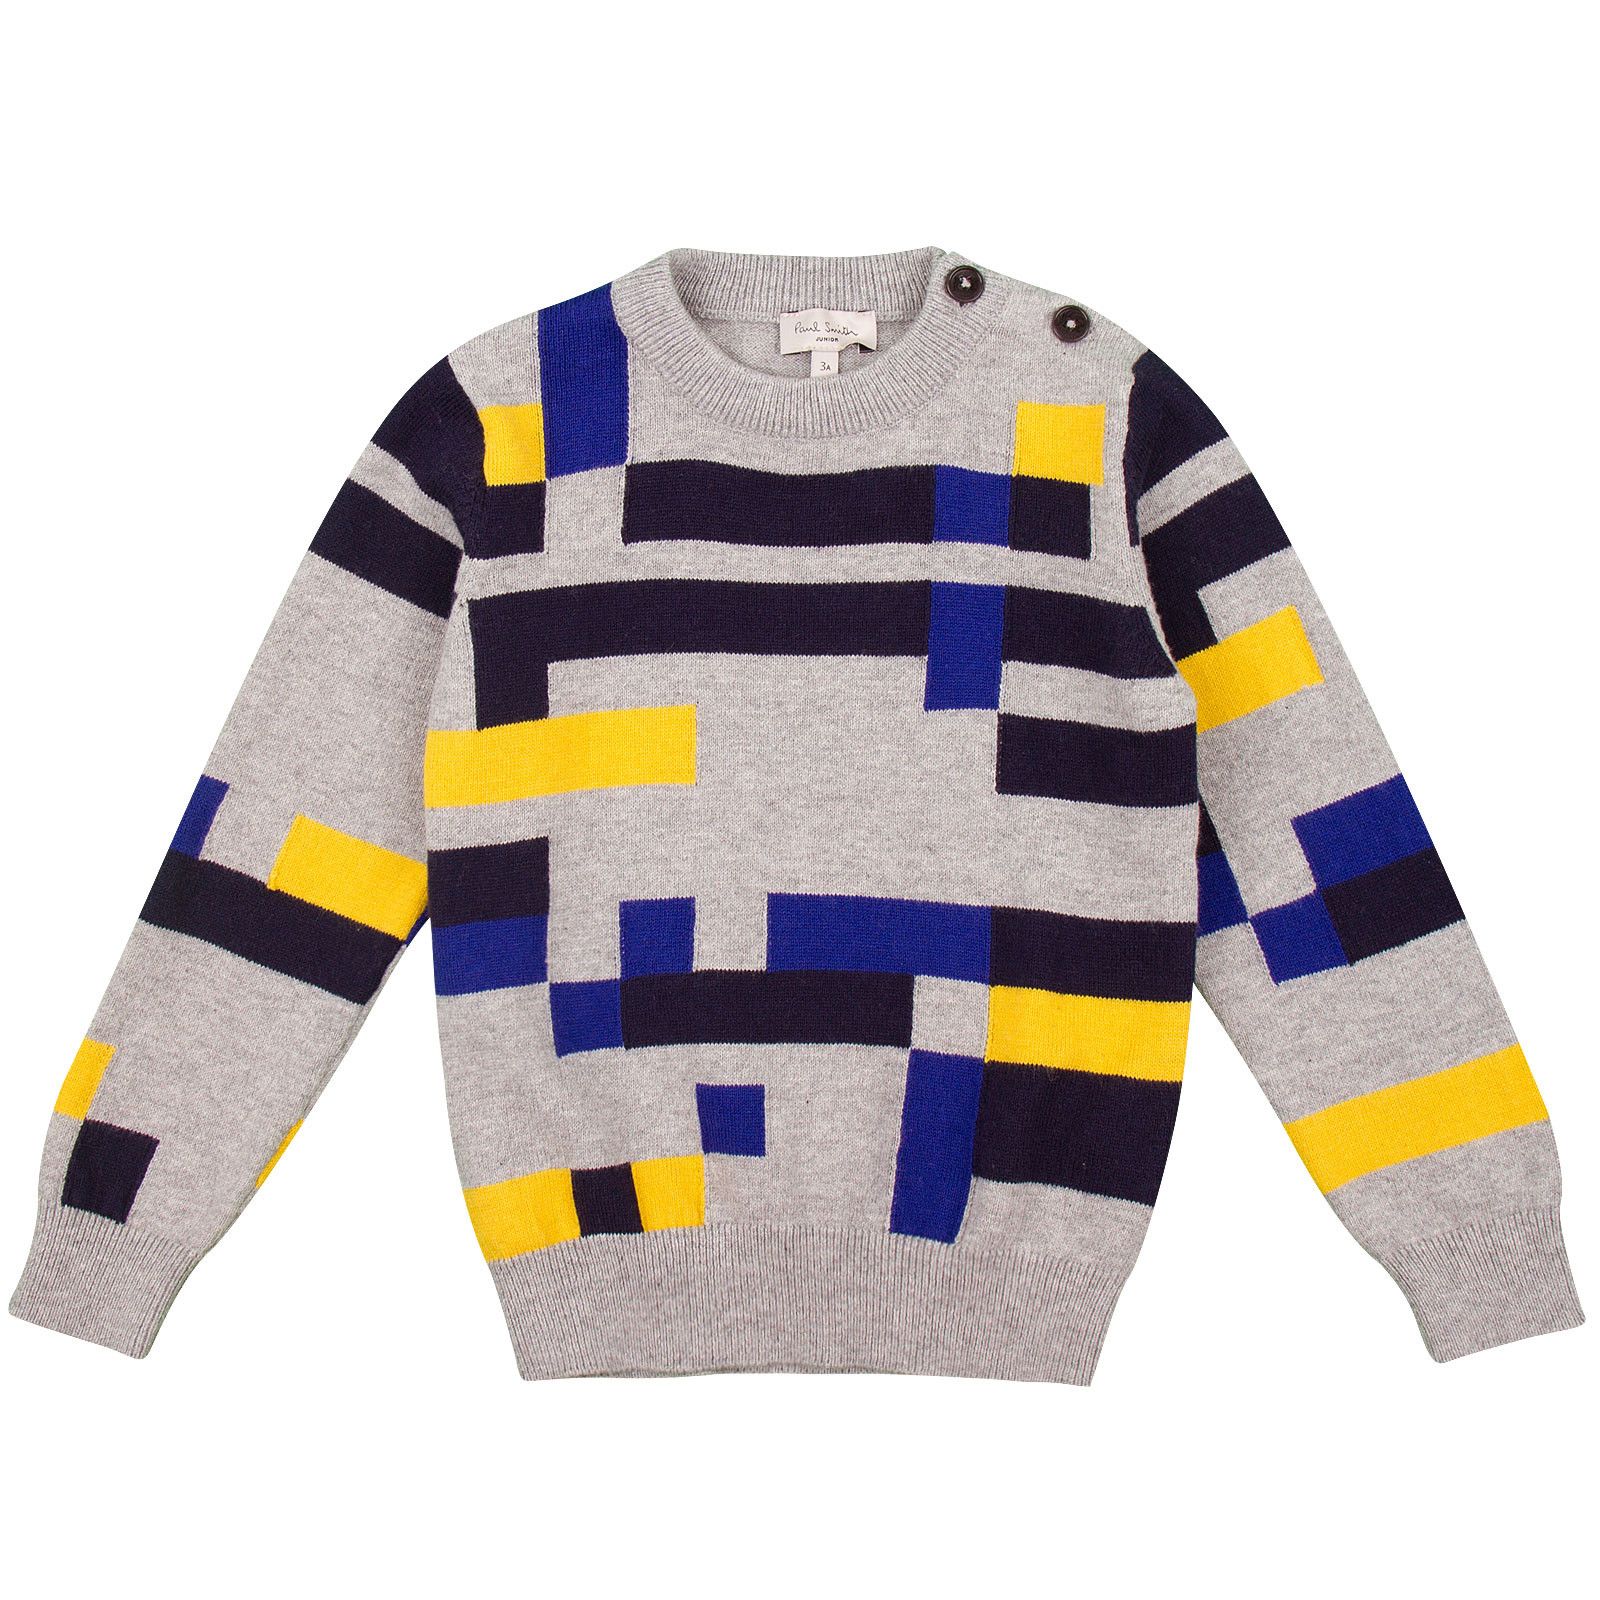 Boys Grey Cashmere Blend Knitted Colour Blocks Trims Sweater - CÉMAROSE | Children's Fashion Store - 1